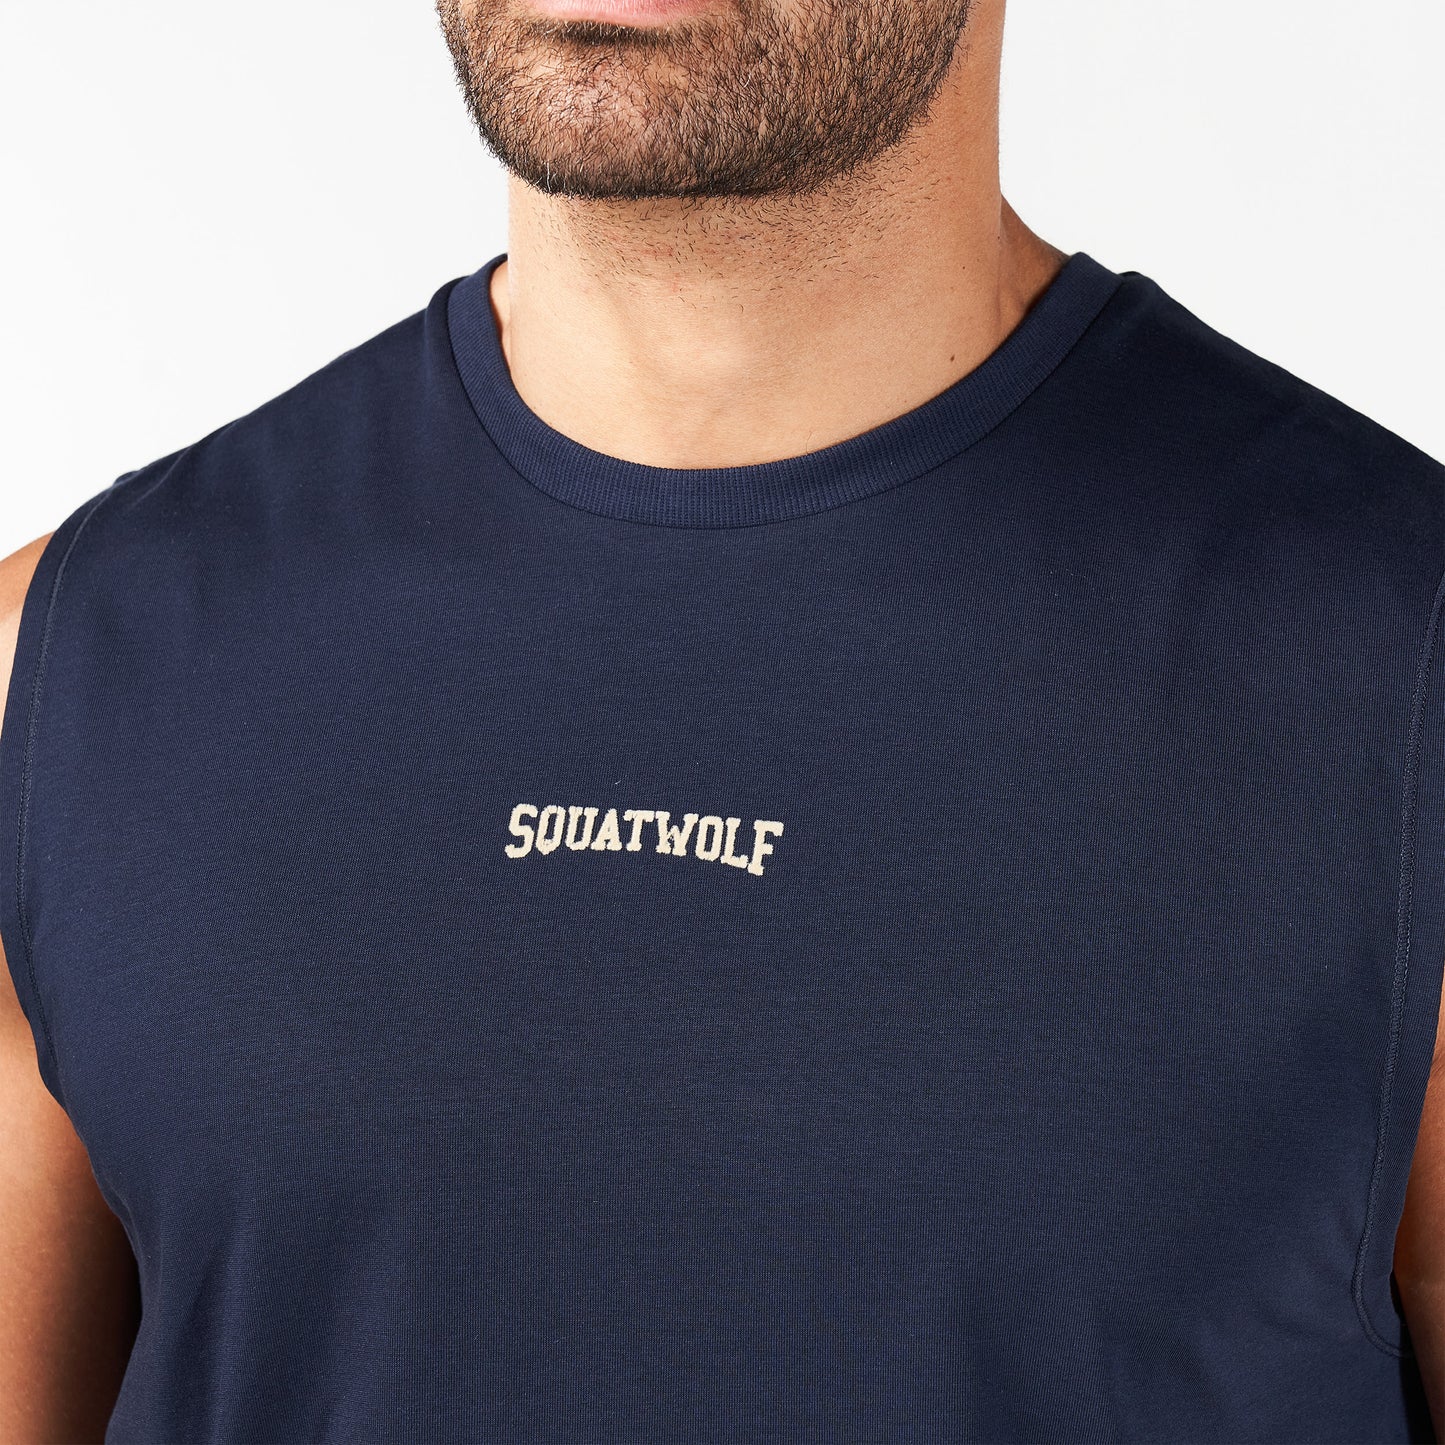 squatwolf-gym-wear-golden-era-young-retro-tank-navy-workout-tank-tops-for-men